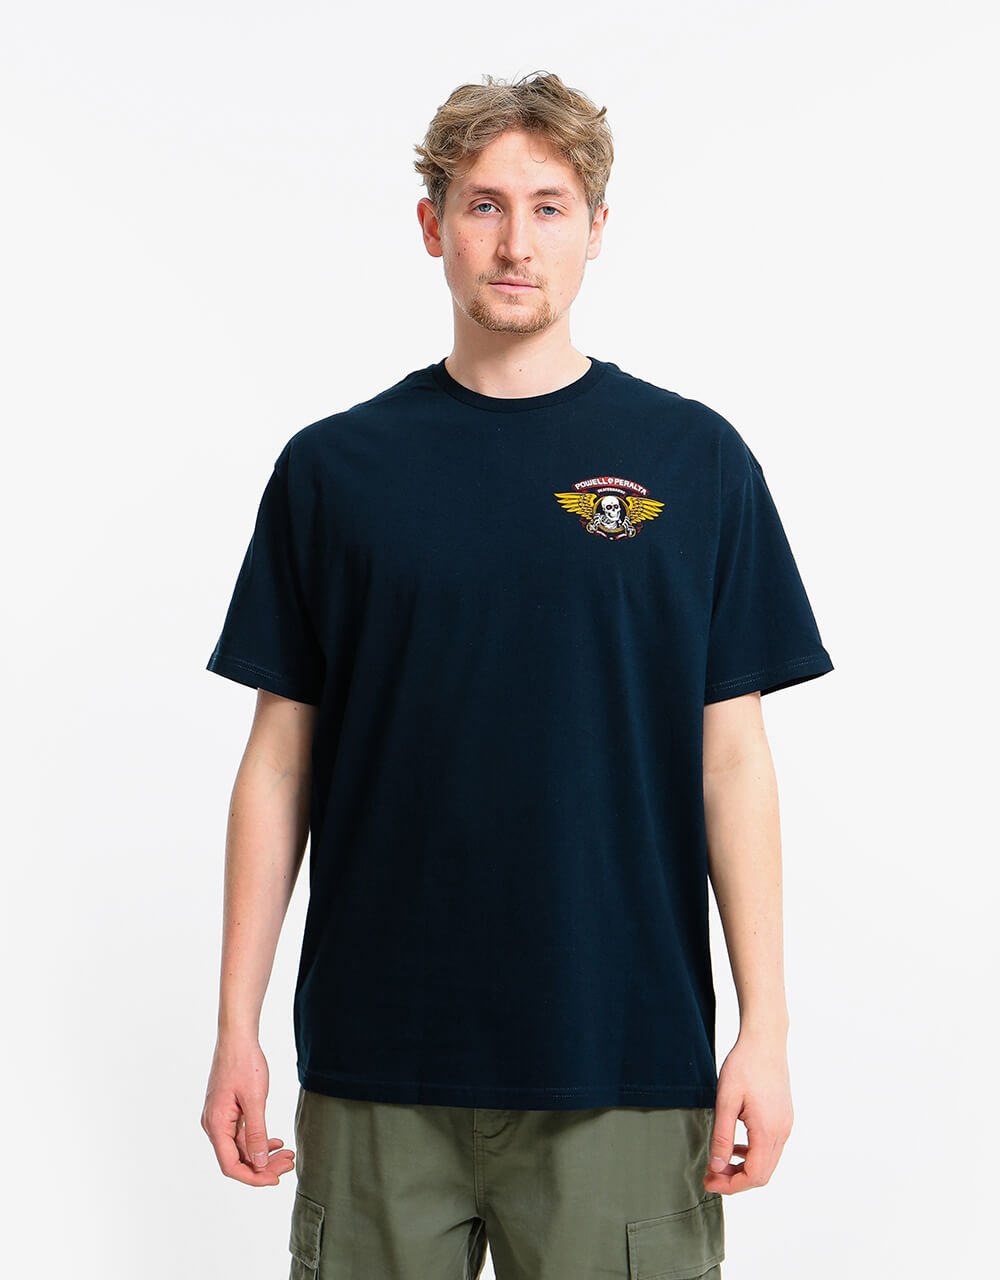 Powell Peralta Winged Ripper T-Shirt - Navy